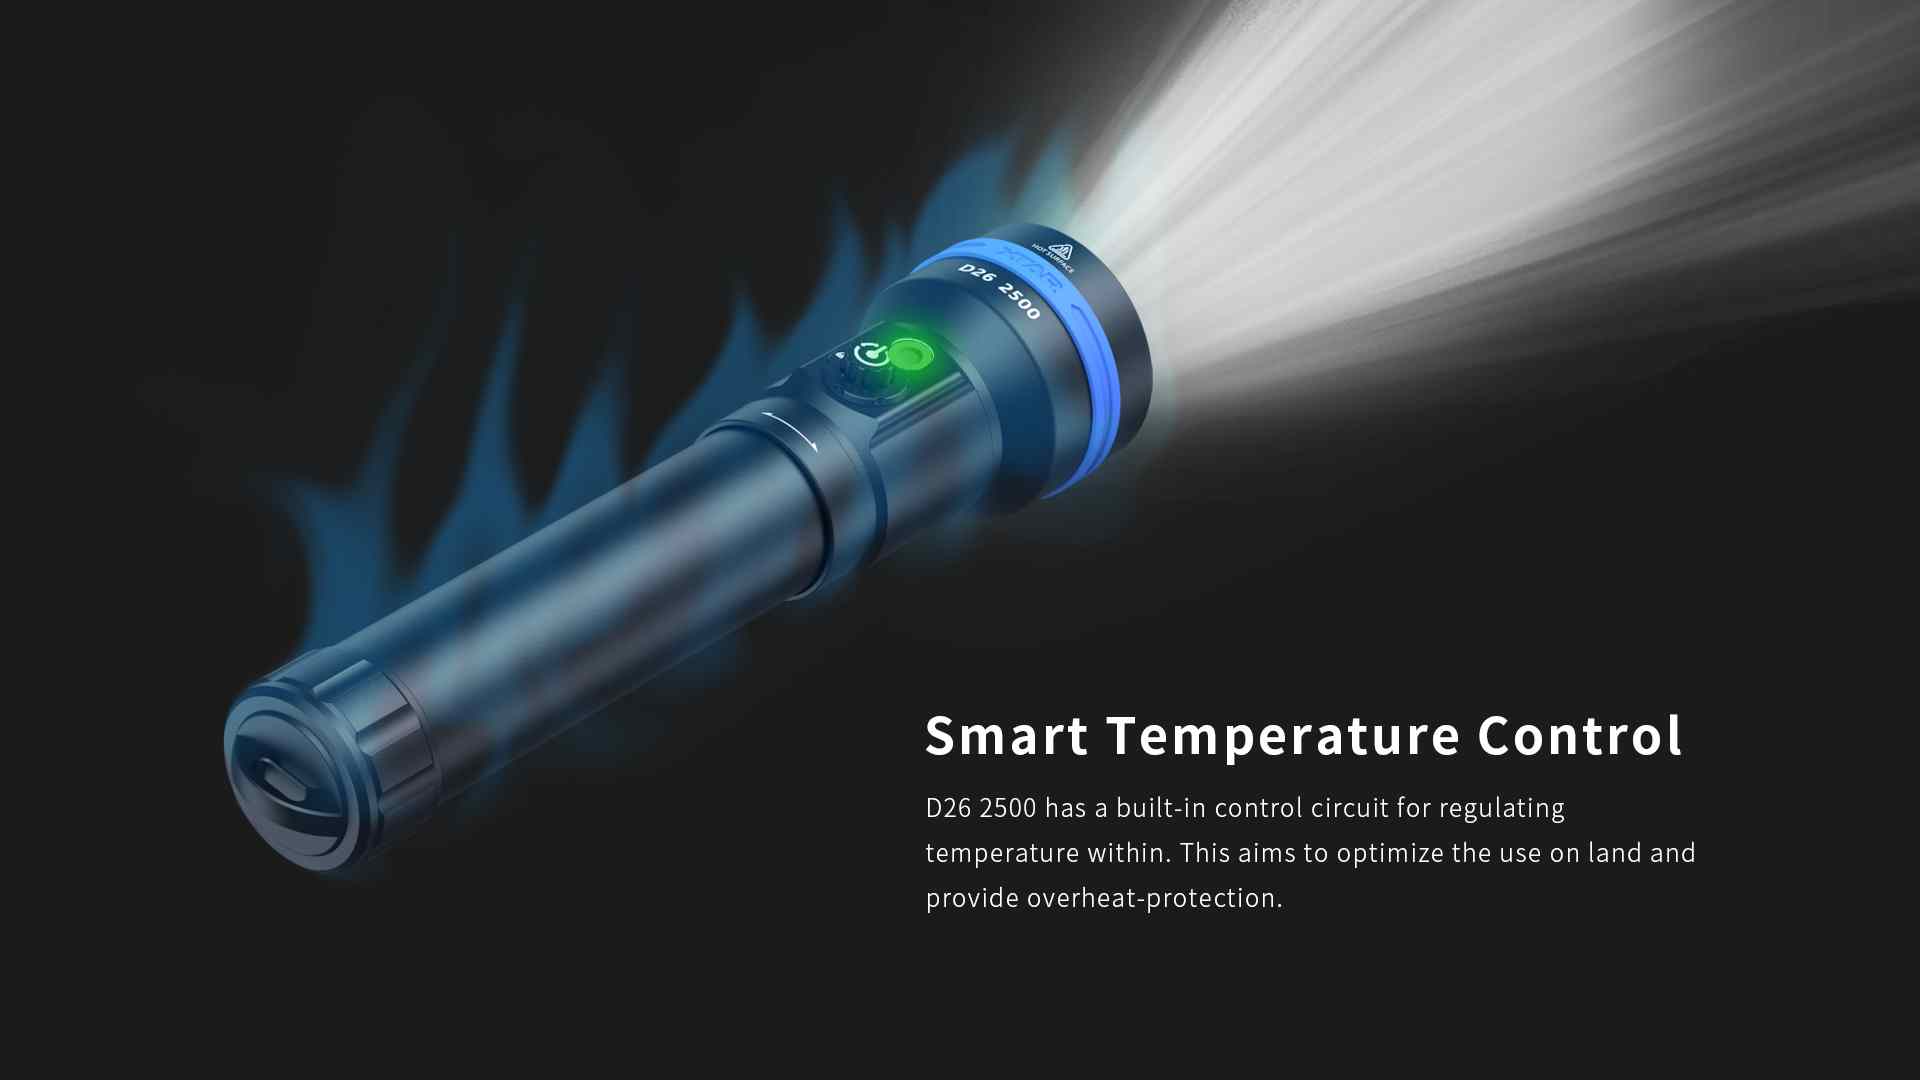 Smart temperature control provides overheat-protection.